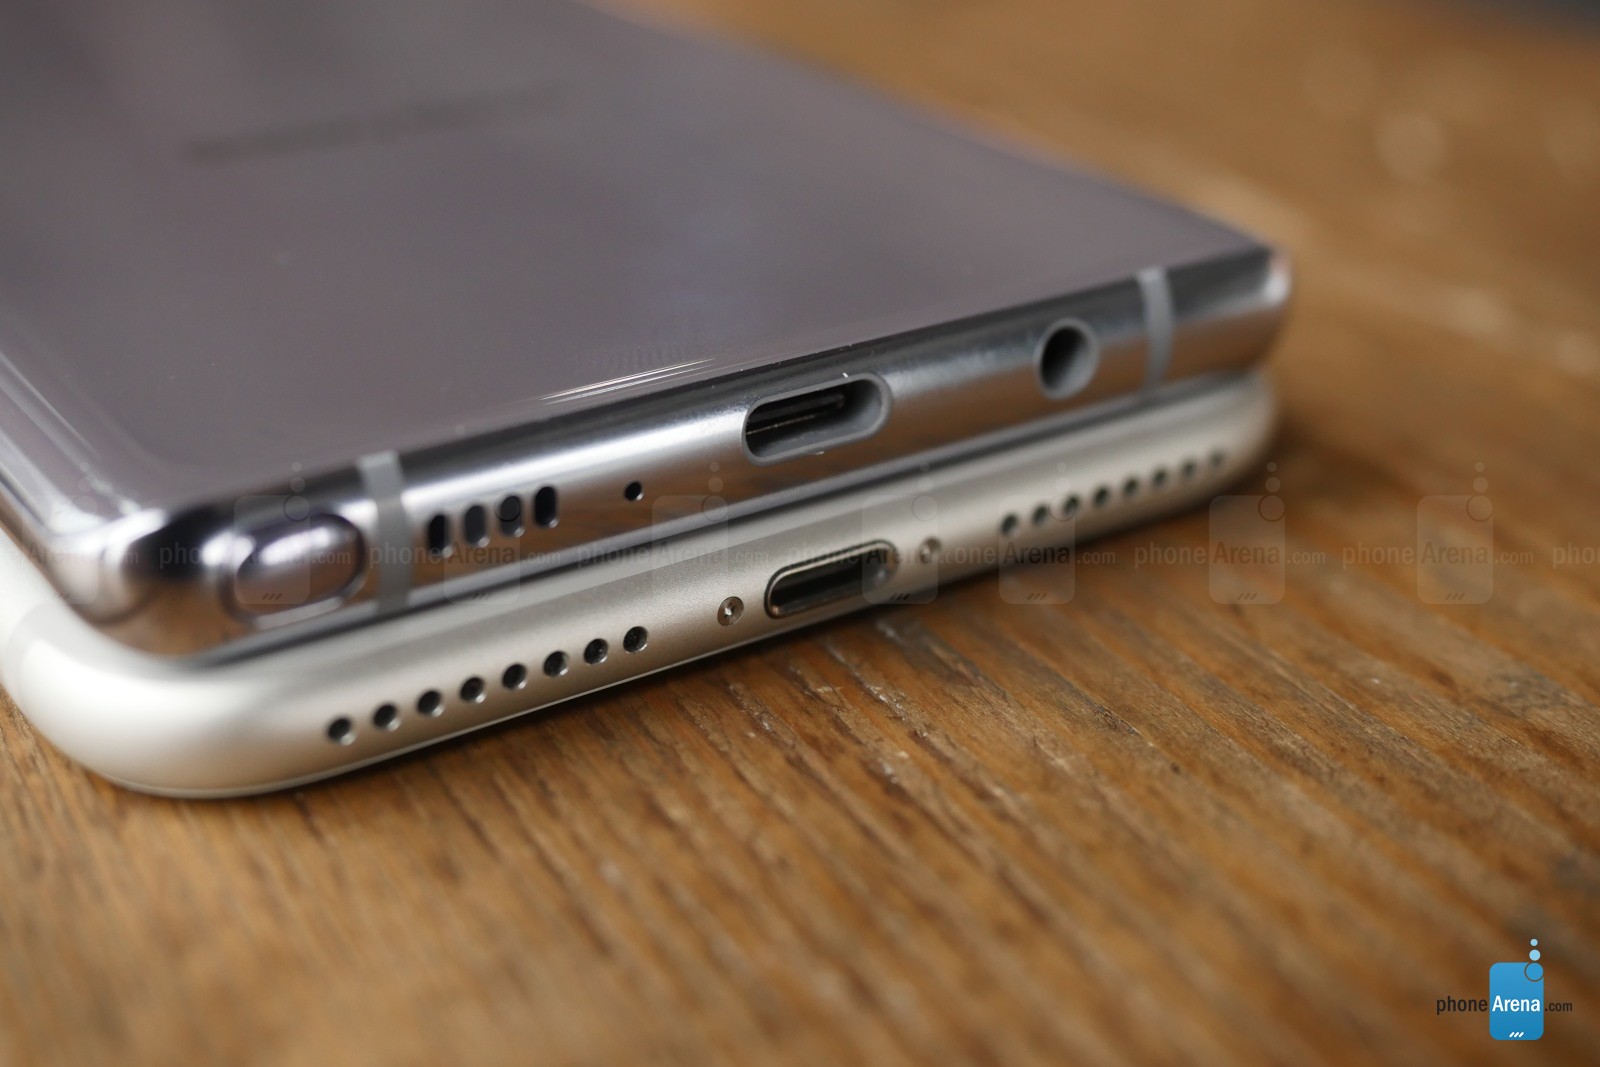 Samsung Galaxy Note 8 vertailu iPhone 7 Plus 4